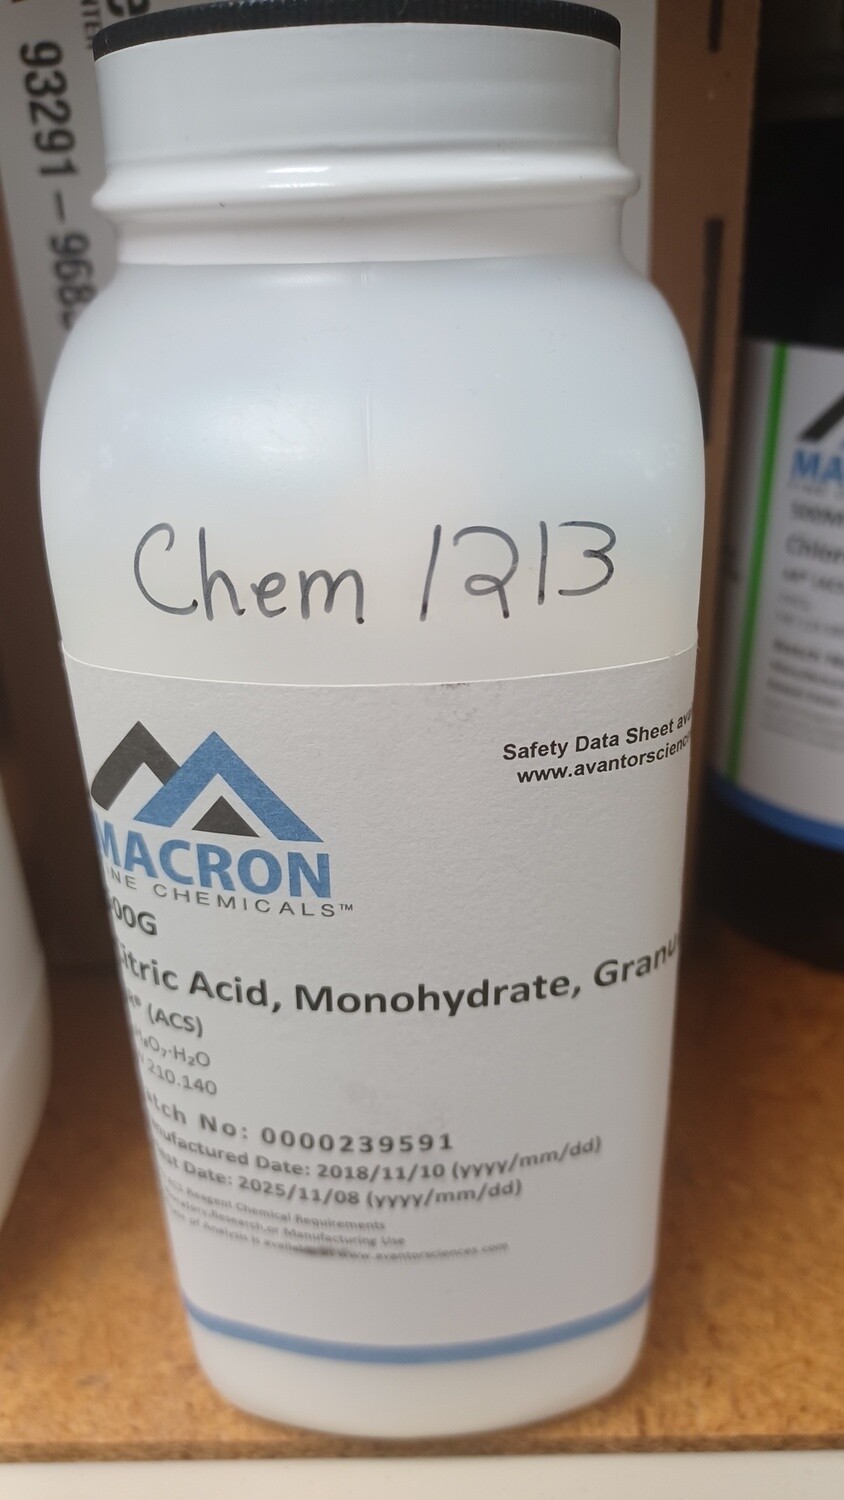 Citric Acid Monohydrate 500g